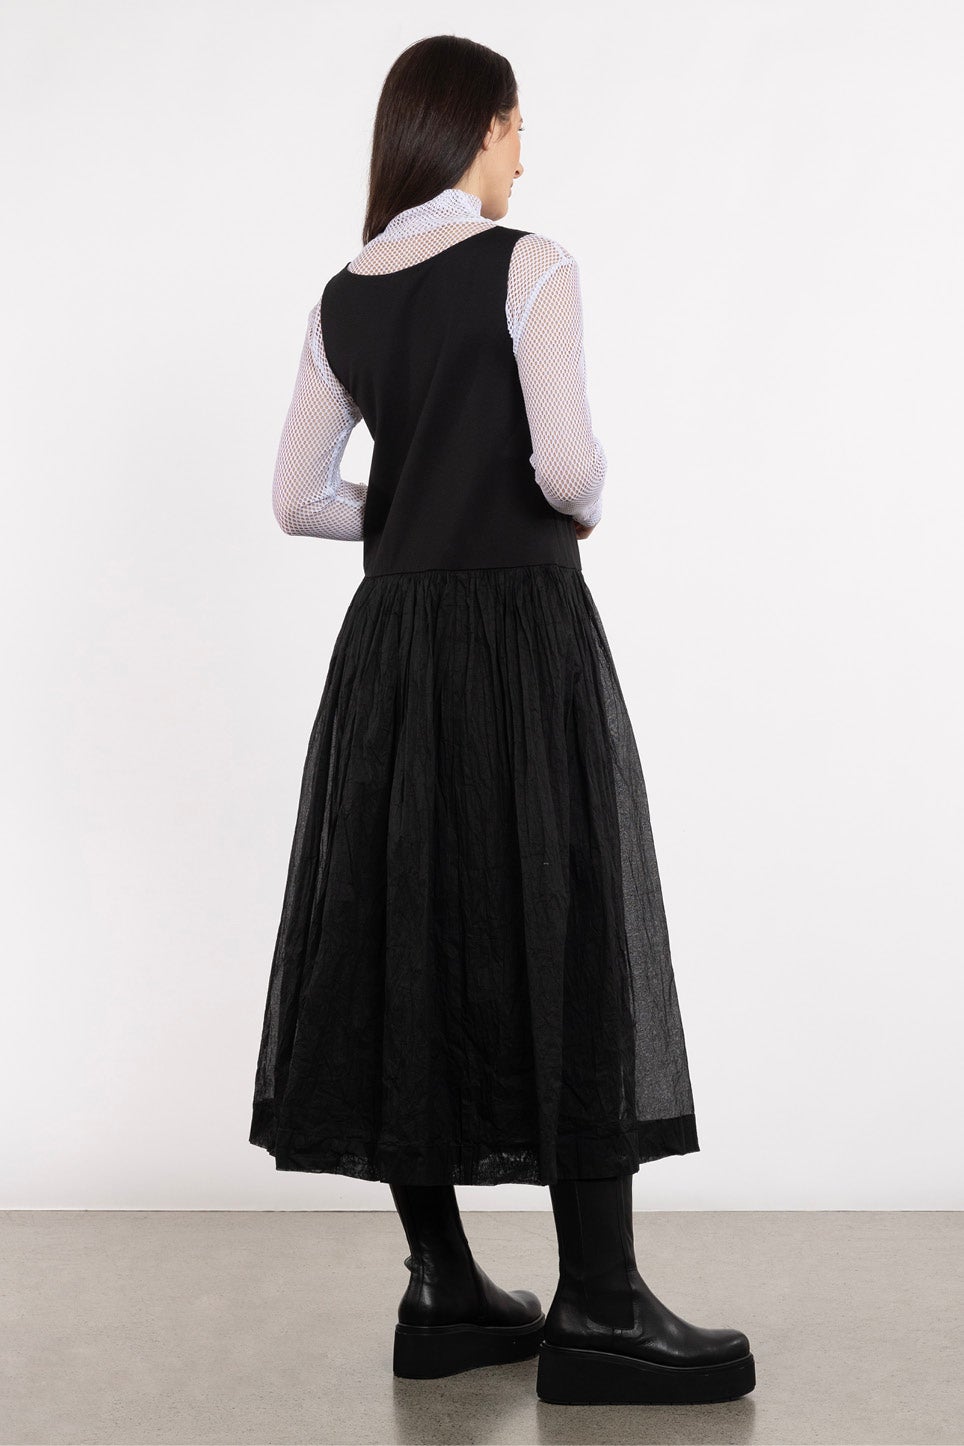 Plus Size Miriam Mesh Inset Flare Dress- Black